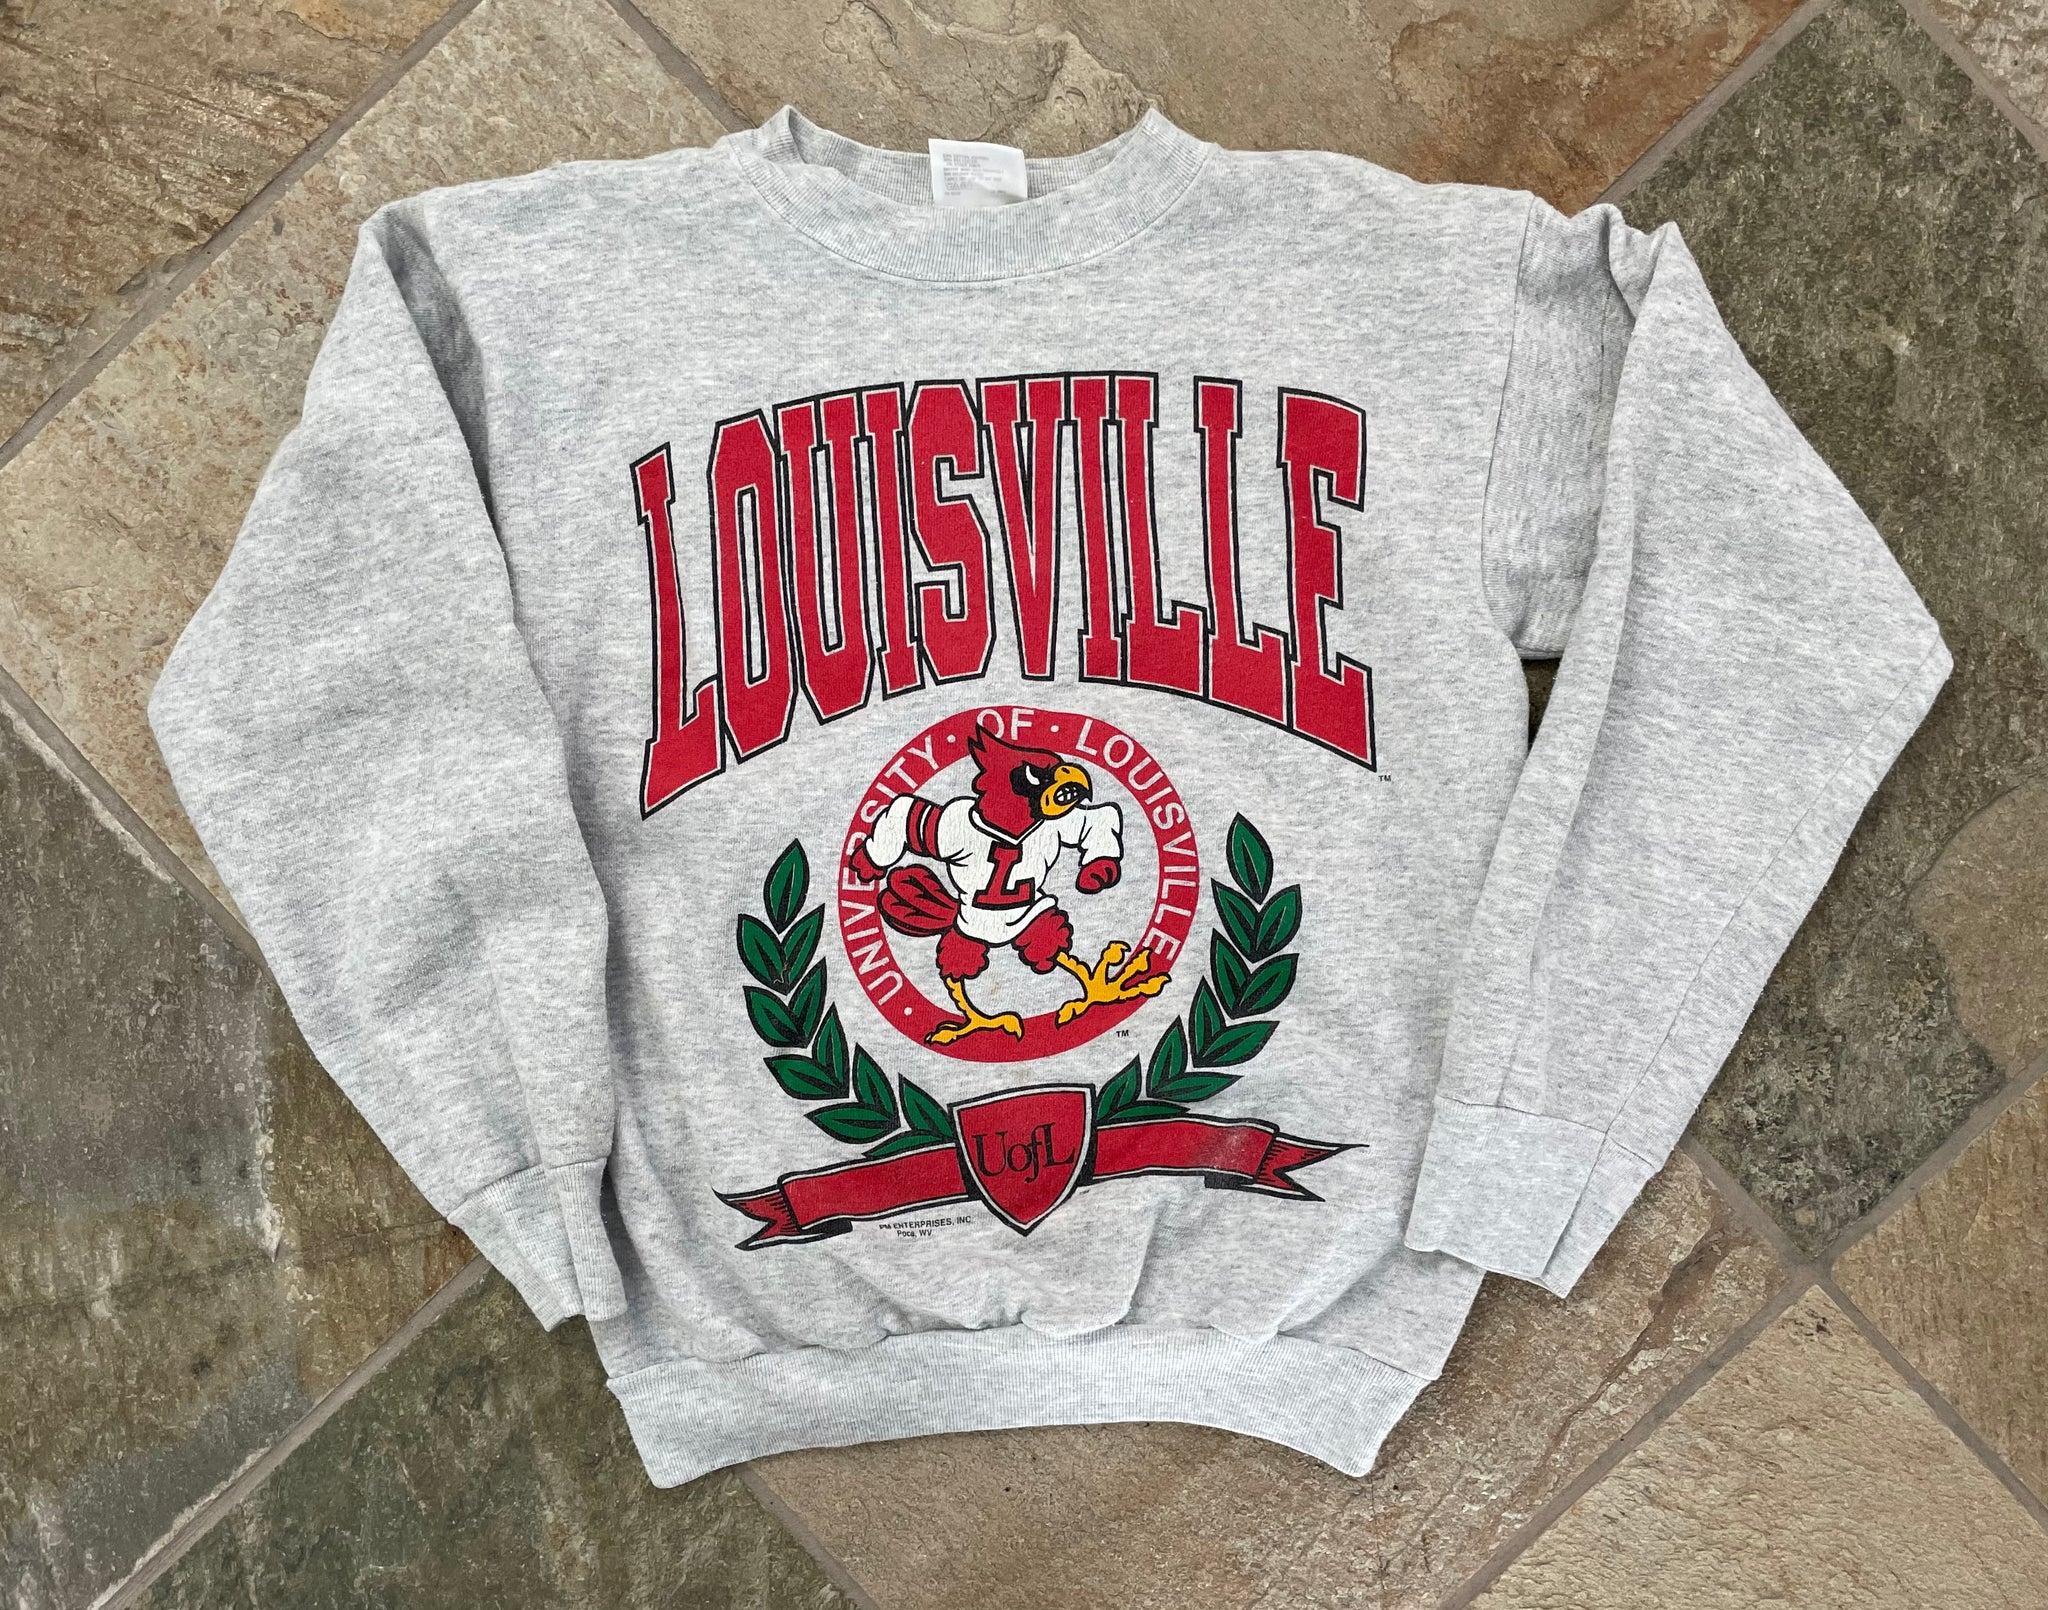 Unisex Children Louisville Cardinals NCAA Shirts for sale